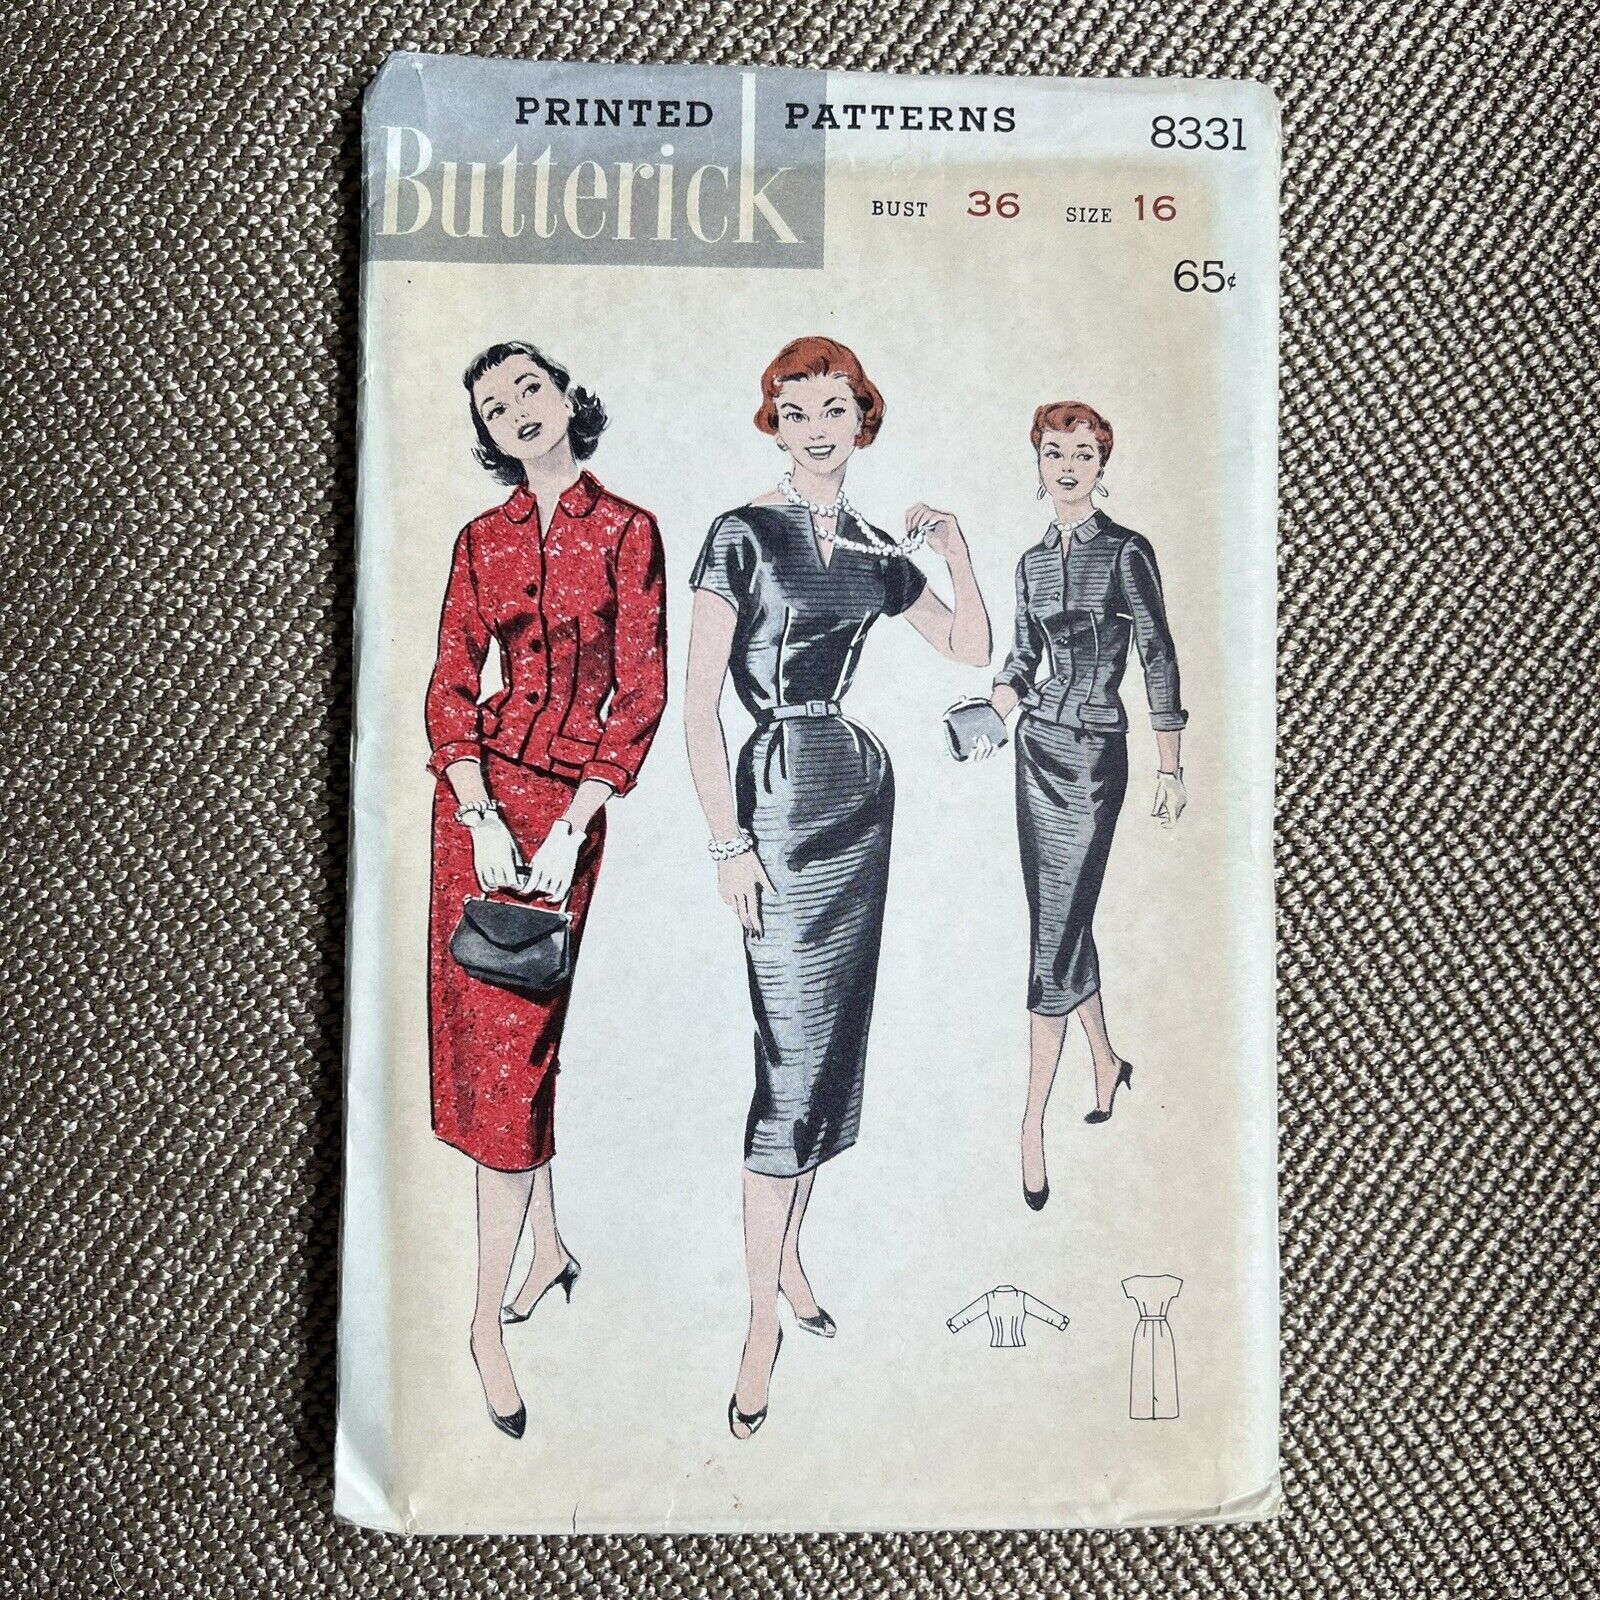 1950s Butterick 8331 Vintage Sewing Pattern Dress Jacket Skirt Size 16 Bust 36